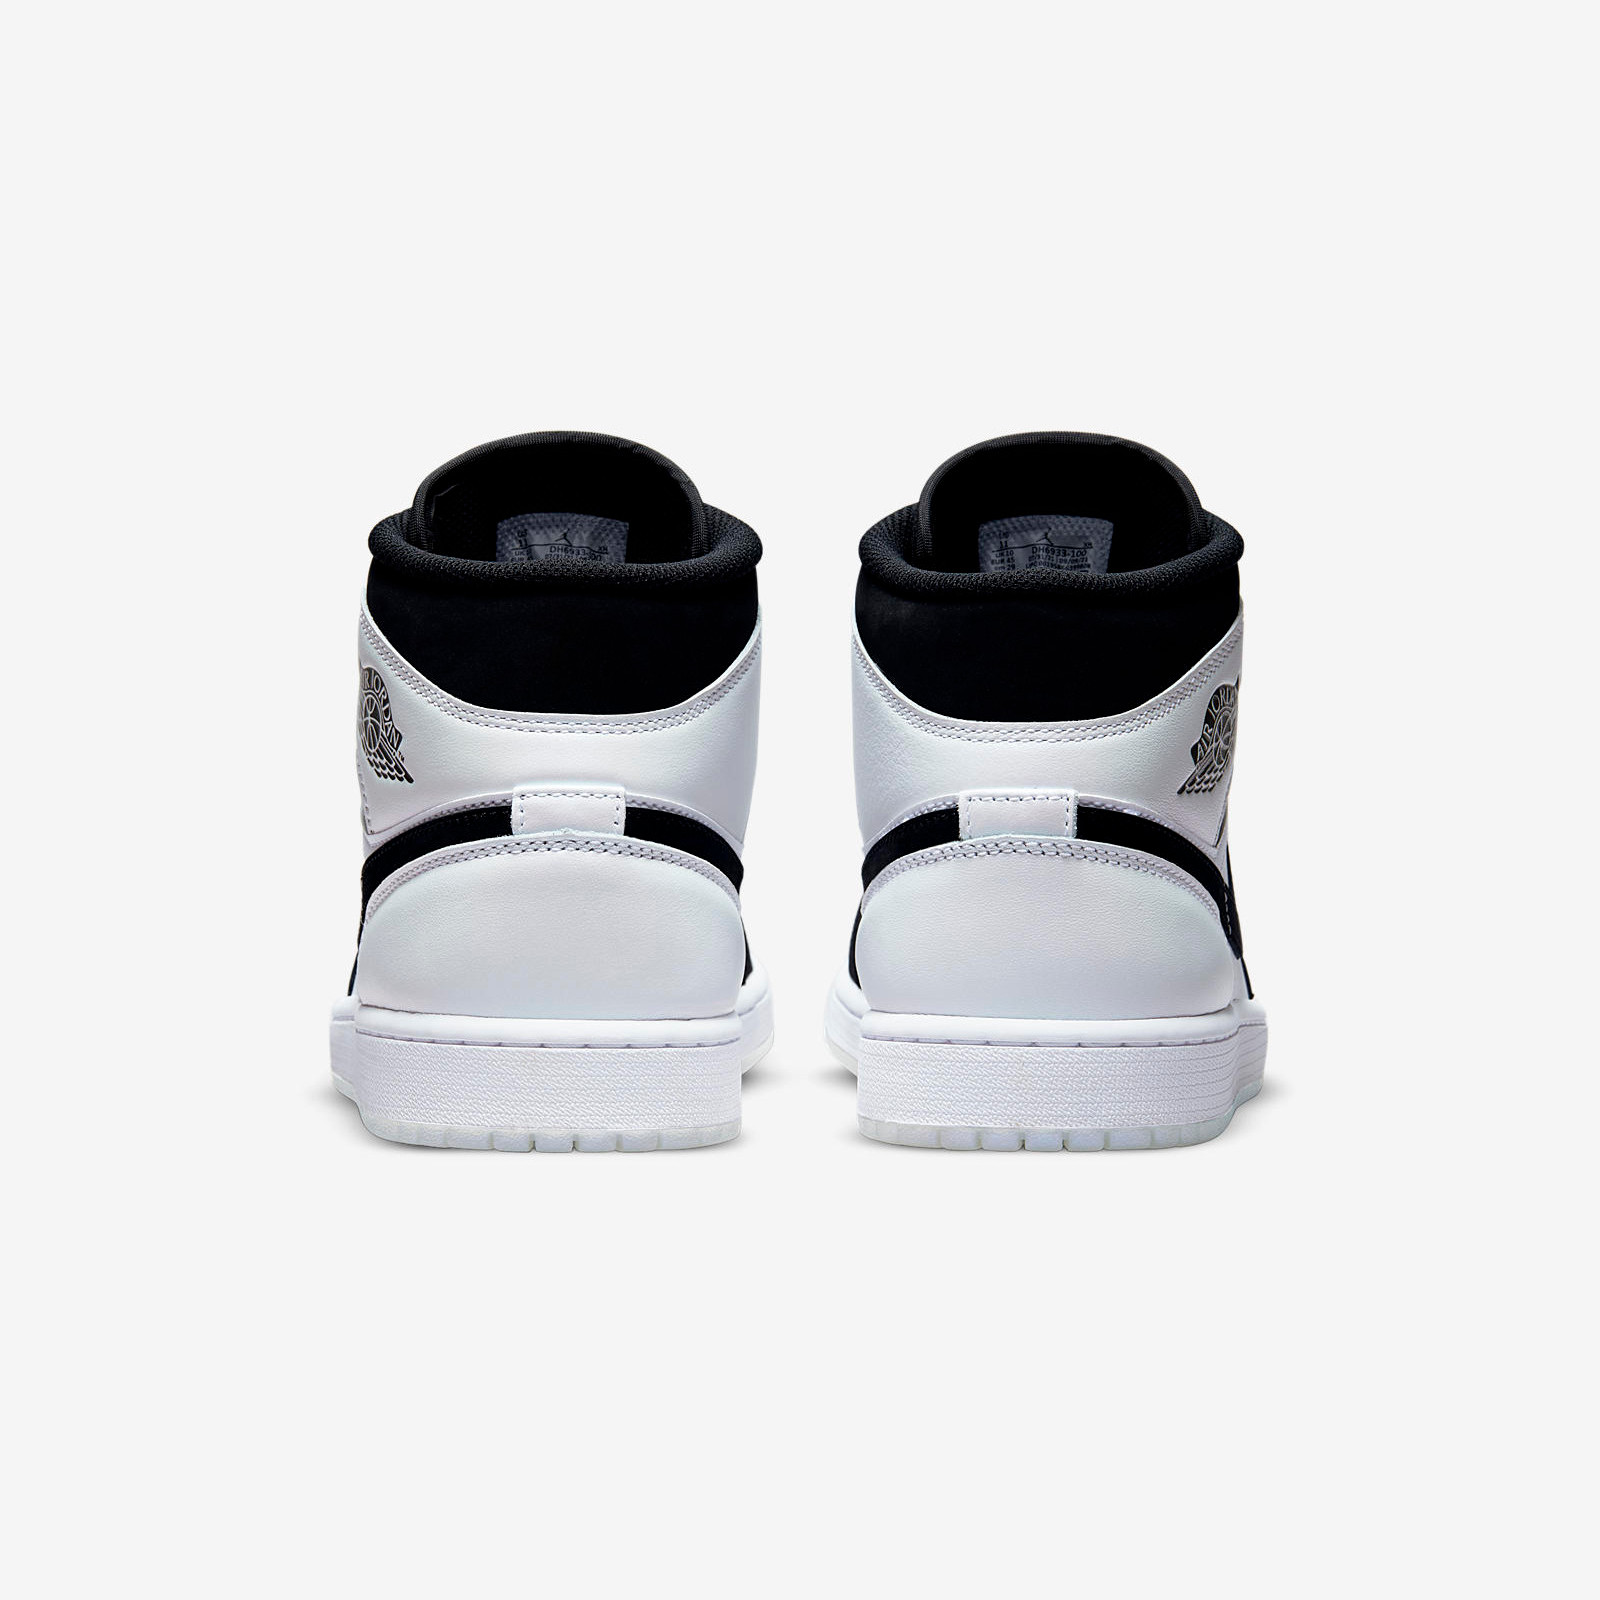 Air Jordan 1 Mid
White / Black